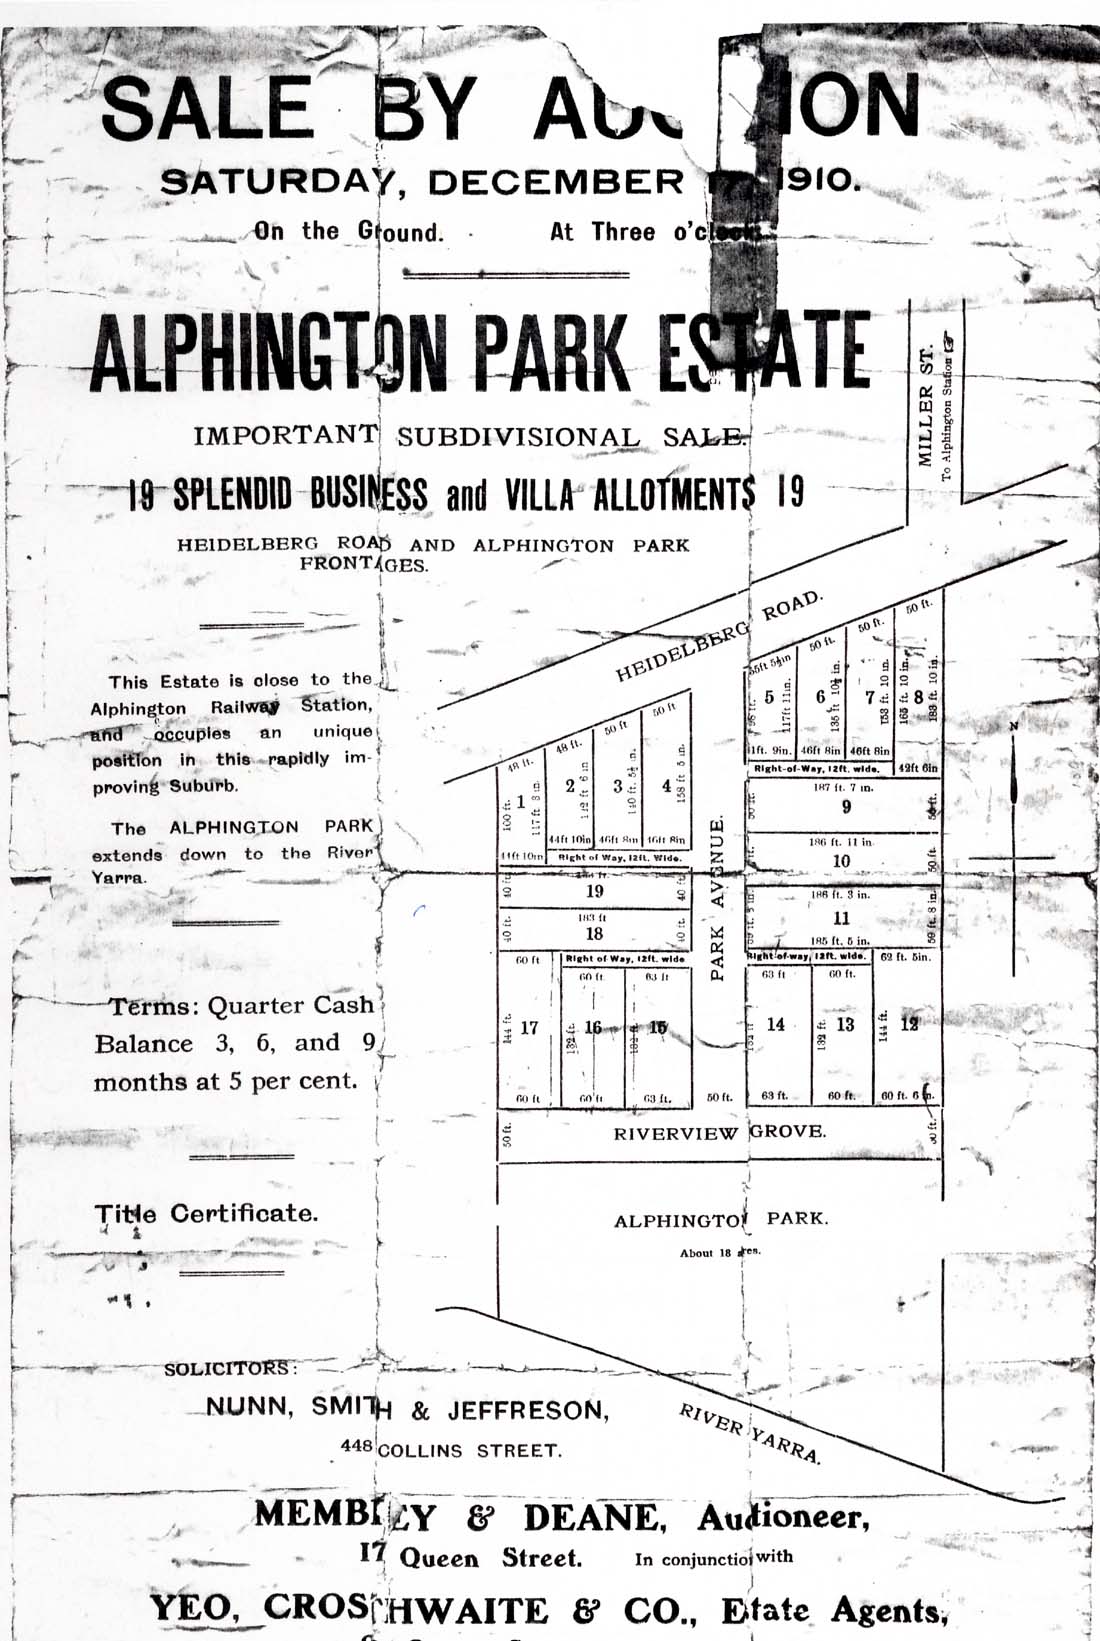 Image of Alphington Park Estate 1910